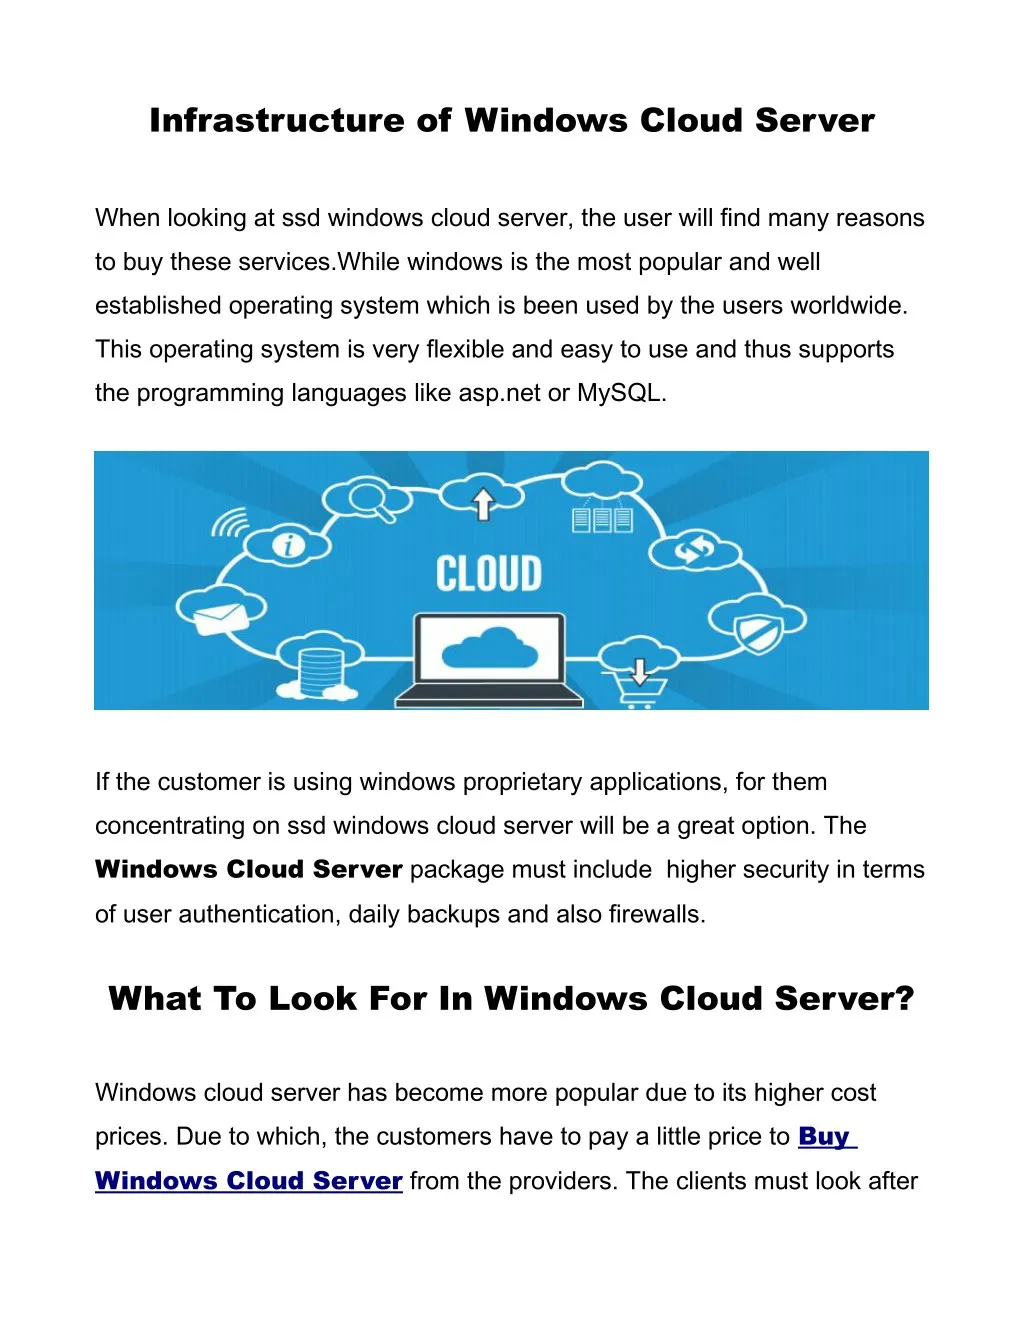 infrastructure of windows cloud server